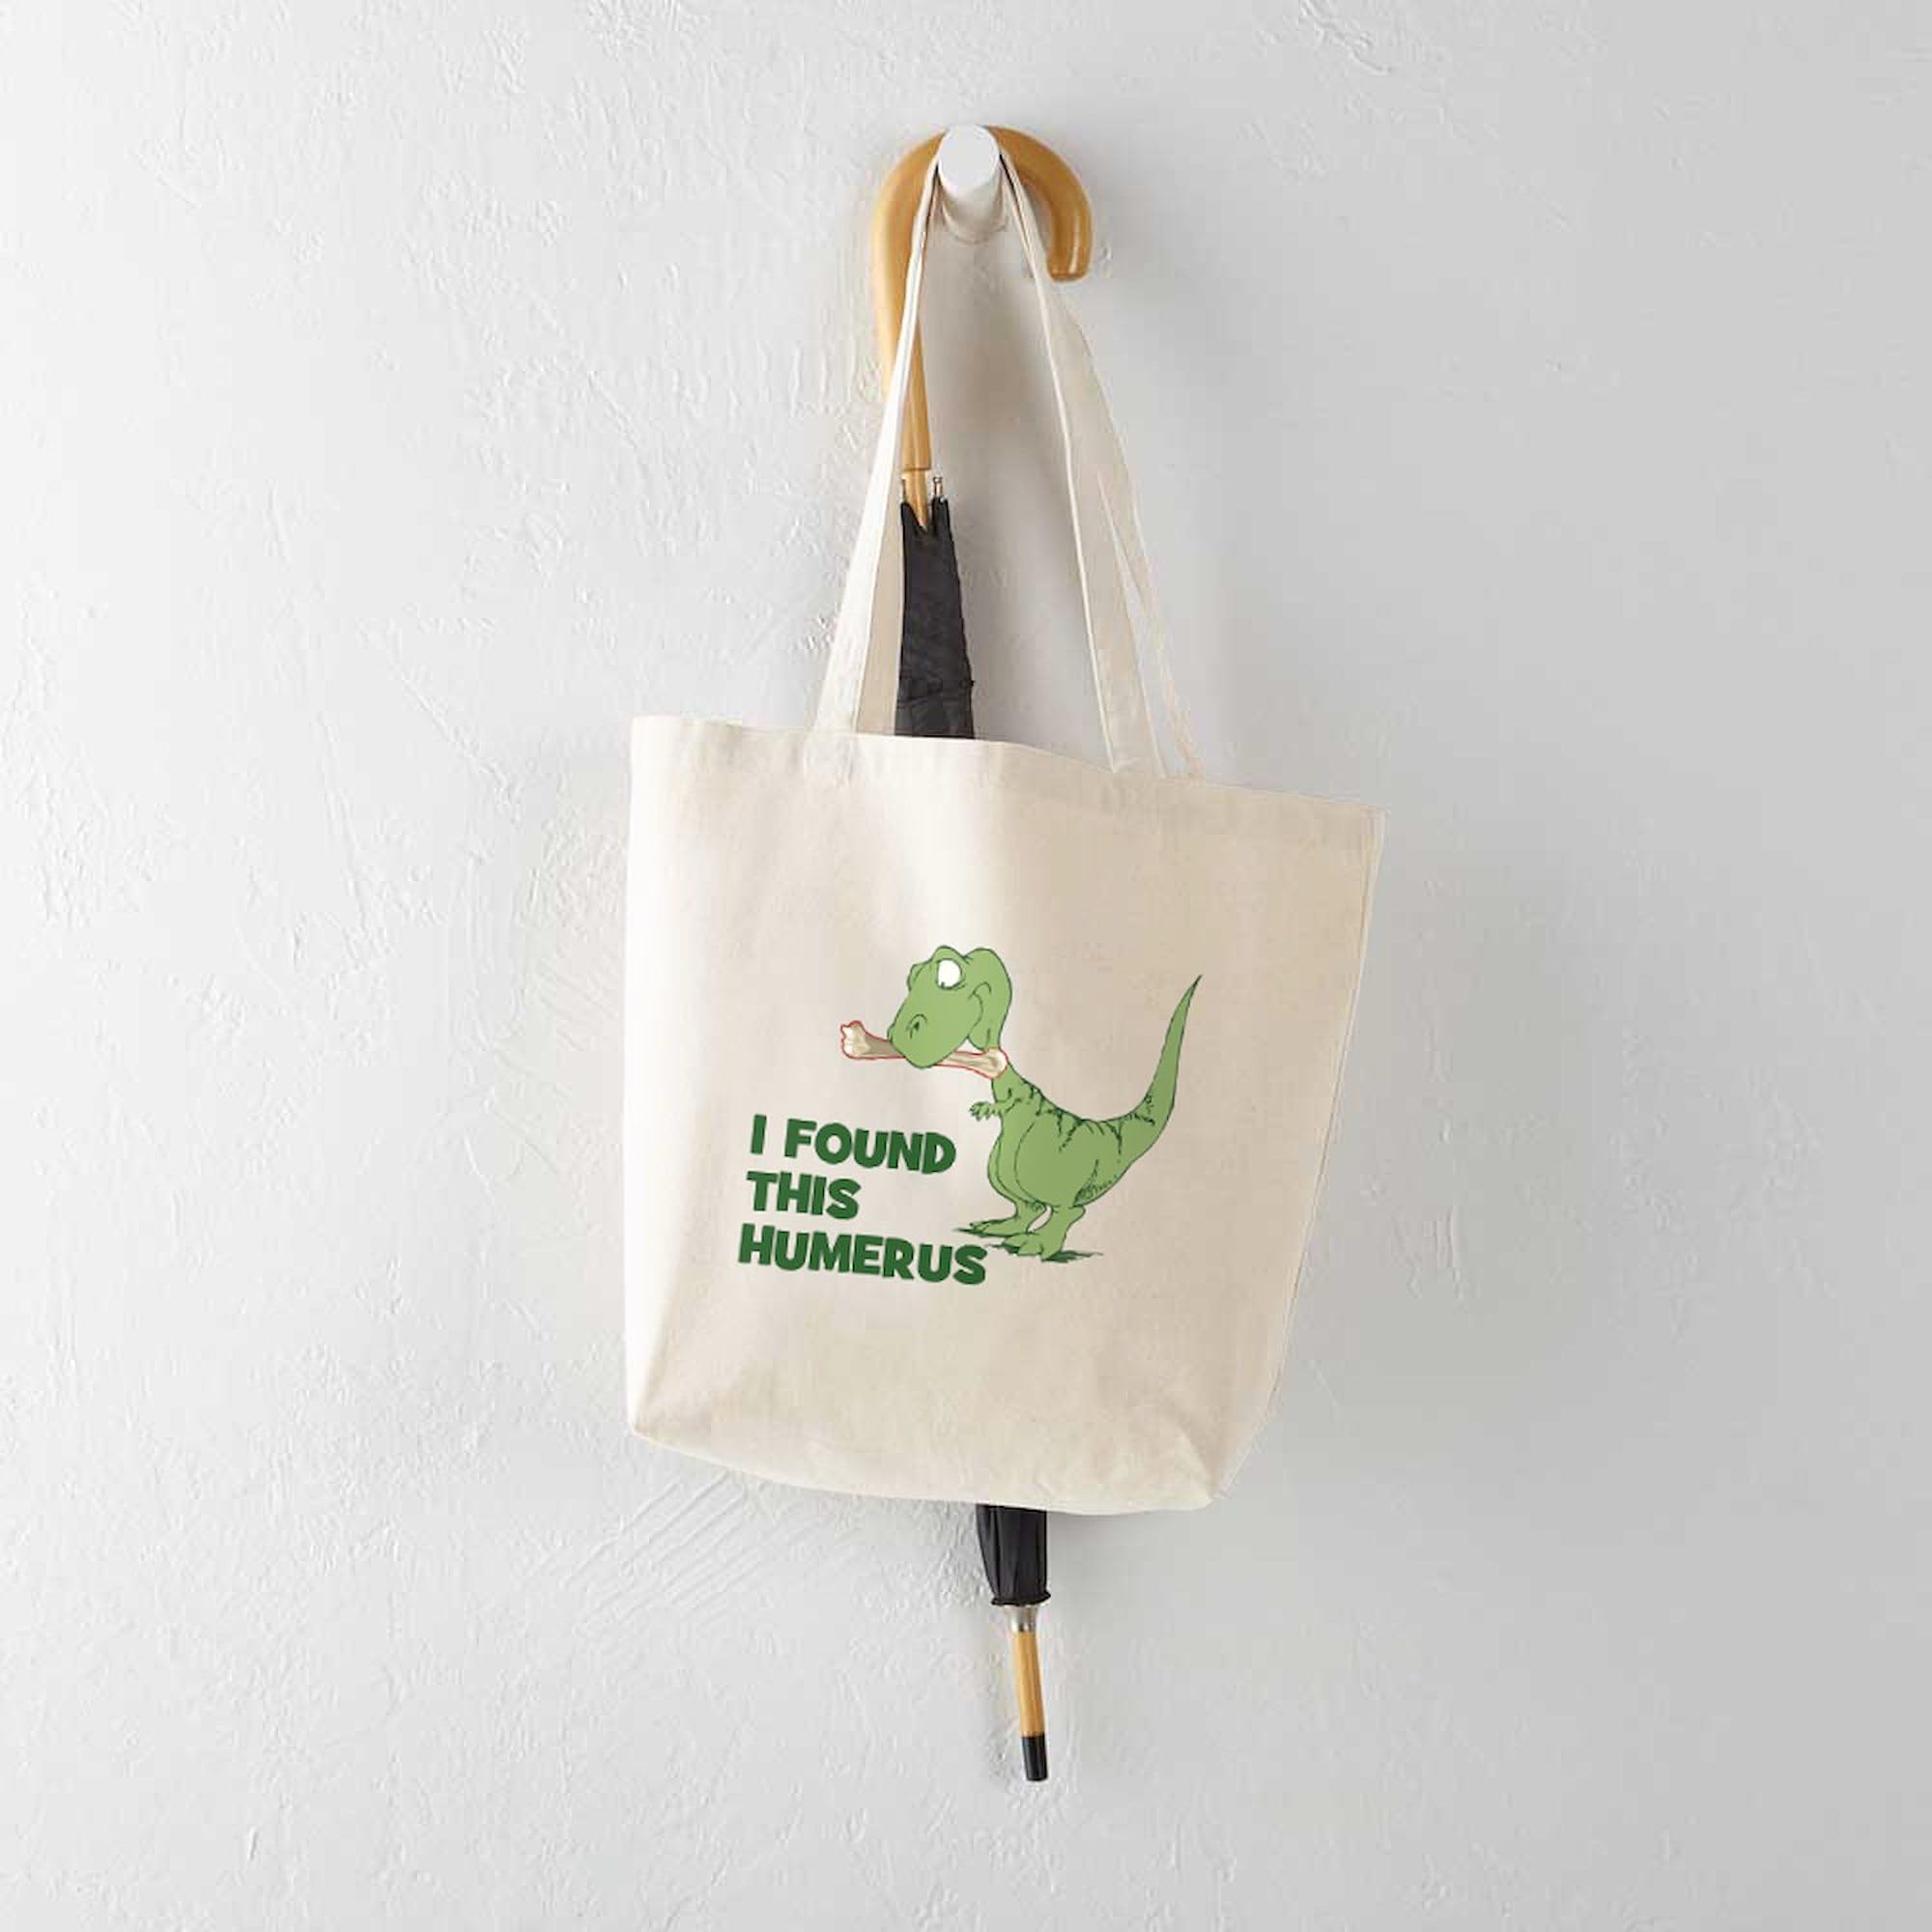 CafePress Cartoon Dinosaur Tote Bag Canvas Tote Shopping Bag